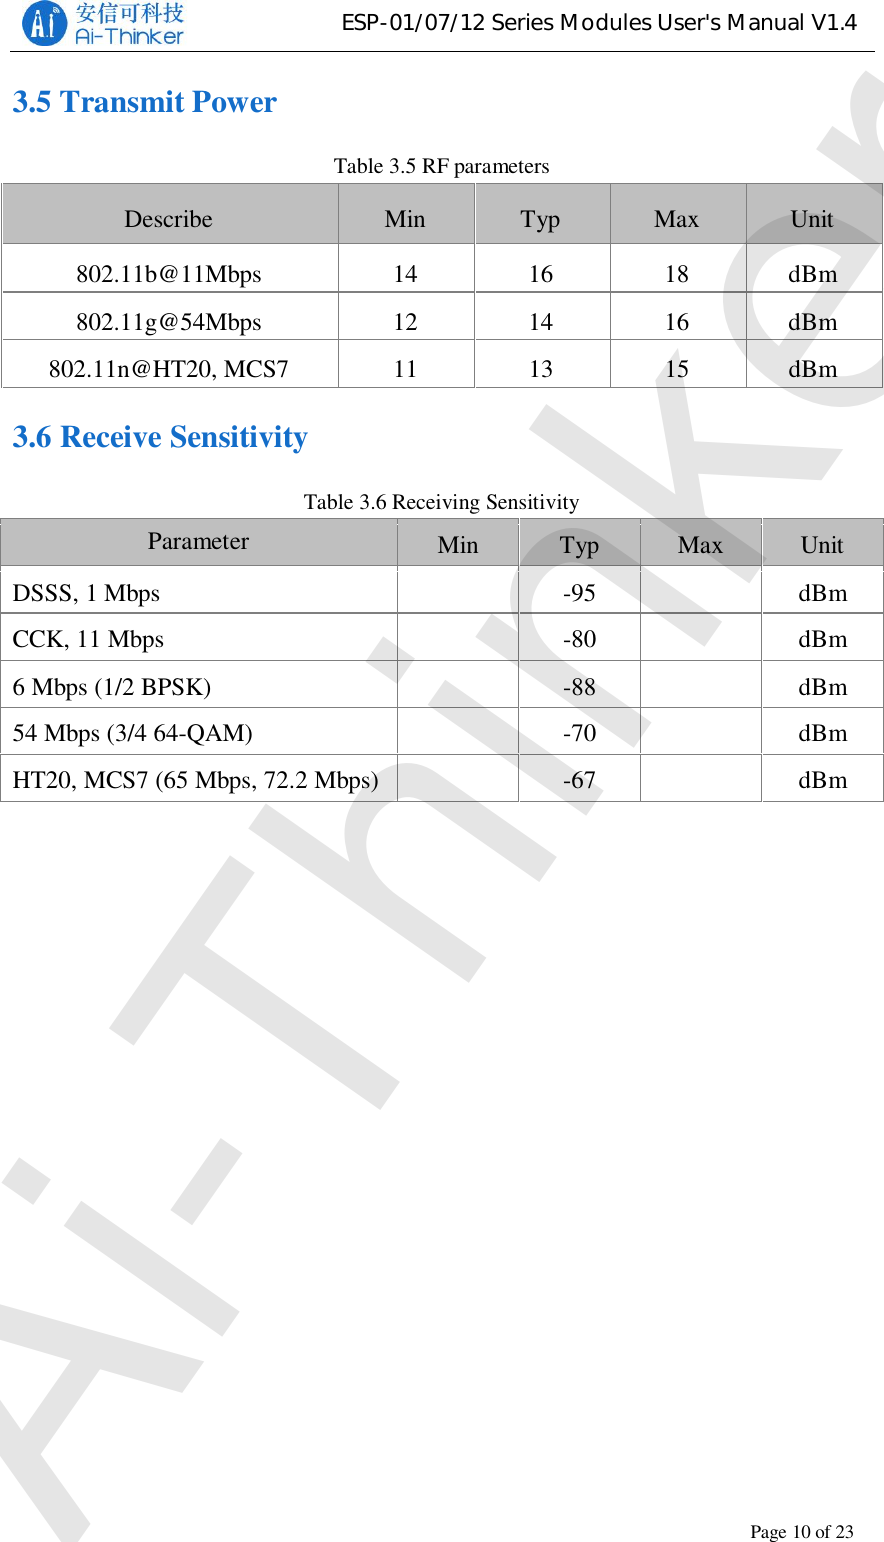 ESP-01/07/12 Series Modules User&apos;s Manual V1.4Copyright © 2017 Shenzhen Ai-Thinker Technology Co., Ltd All Rights ReservedPage10of233.5 Transmit PowerTable 3.5 RF parametersDescribe Min Typ Max Unit802.11b@11Mbps 14 16 18 dBm802.11g@54Mbps 12 14 16 dBm802.11n@HT20, MCS7 11 13 15 dBm3.6 Receive SensitivityTable 3.6 Receiving SensitivityParameter Min Typ Max UnitDSSS, 1 Mbps -95 dBmCCK, 11 Mbps -80 dBm6 Mbps (1/2 BPSK) -88 dBm54 Mbps (3/4 64-QAM) -70 dBmHT20, MCS7 (65 Mbps, 72.2 Mbps) -67 dBmAi-Thinker